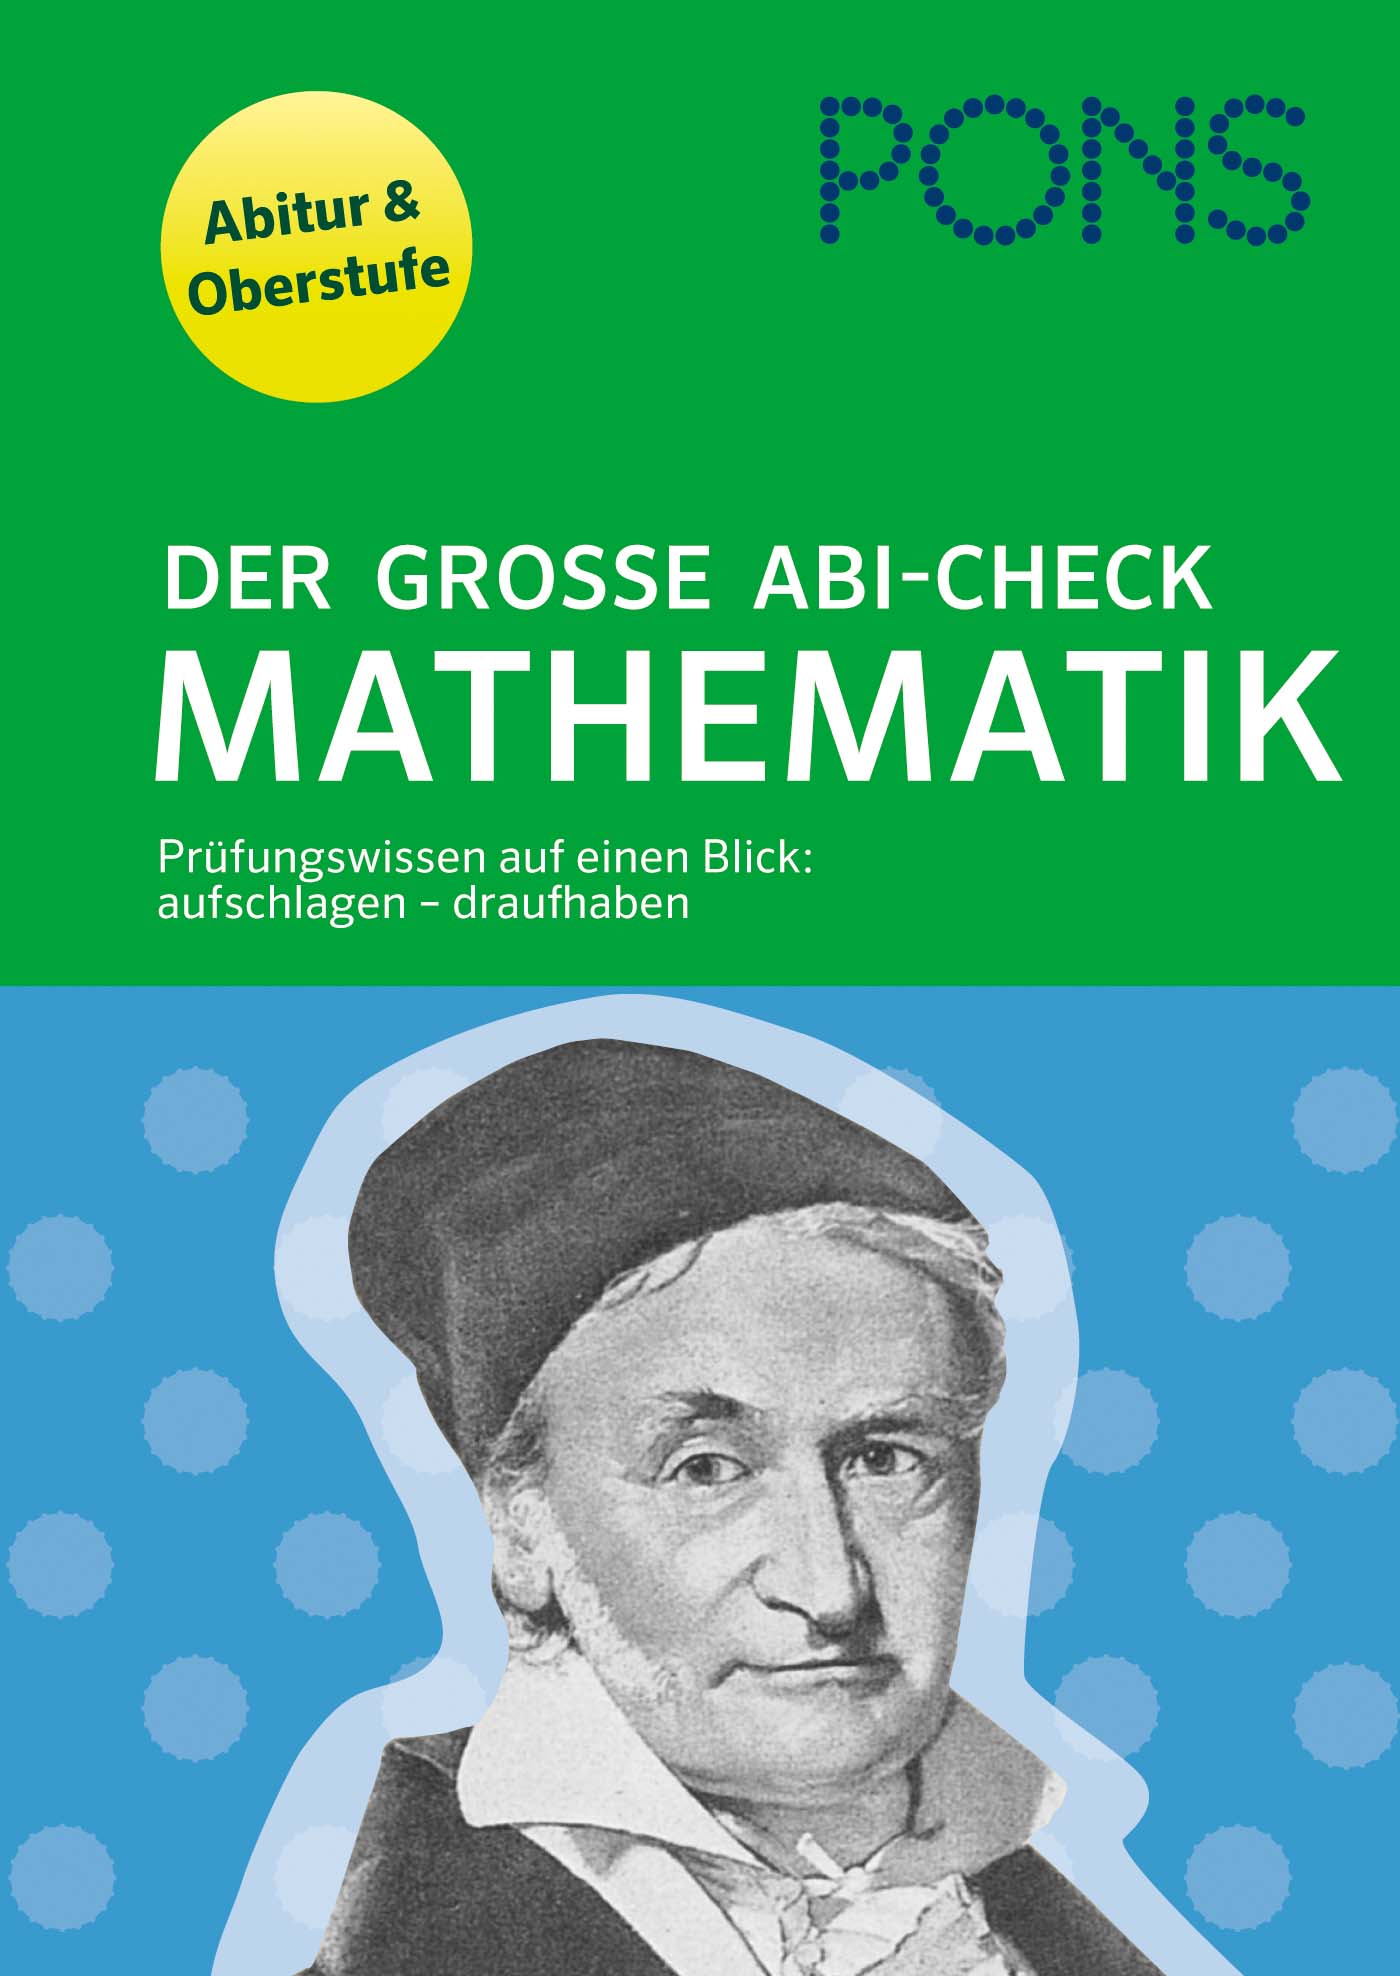 PONS Der große Abi-Check Mathematik  - Picture 1 of 1